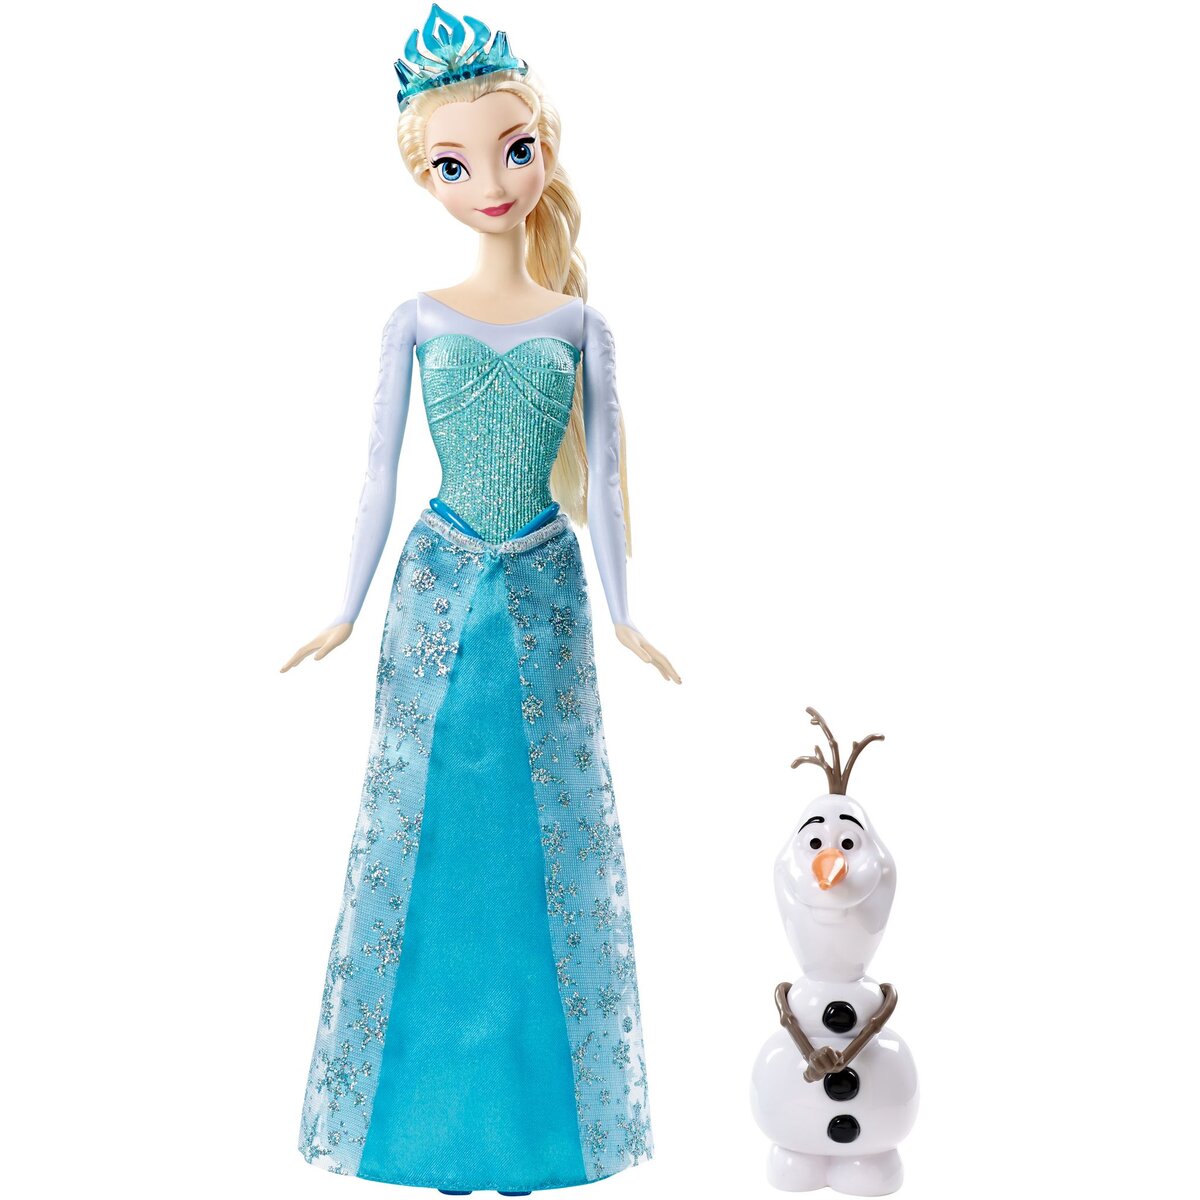 MATTEL Poupée Elsa et figurine Olaf